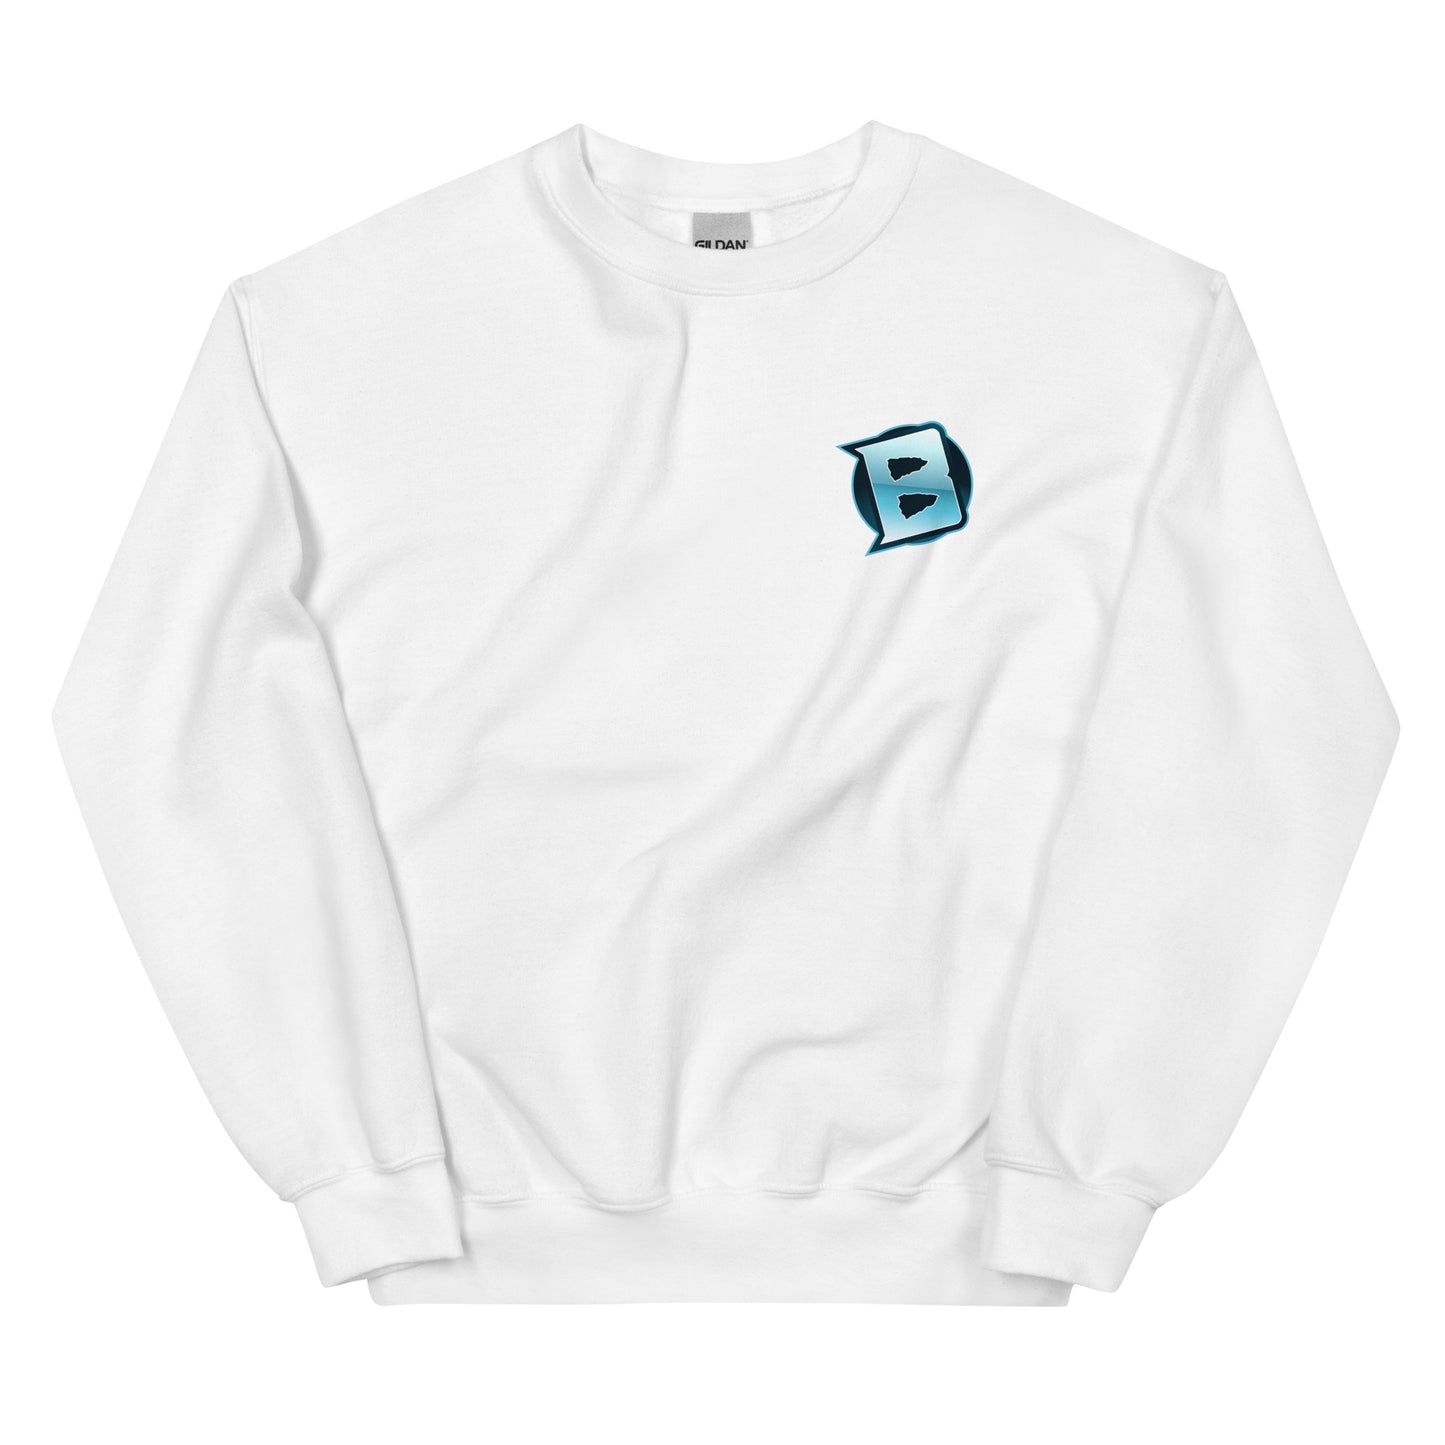 ThaBeast - Unisex Sweatshirt - B Logo